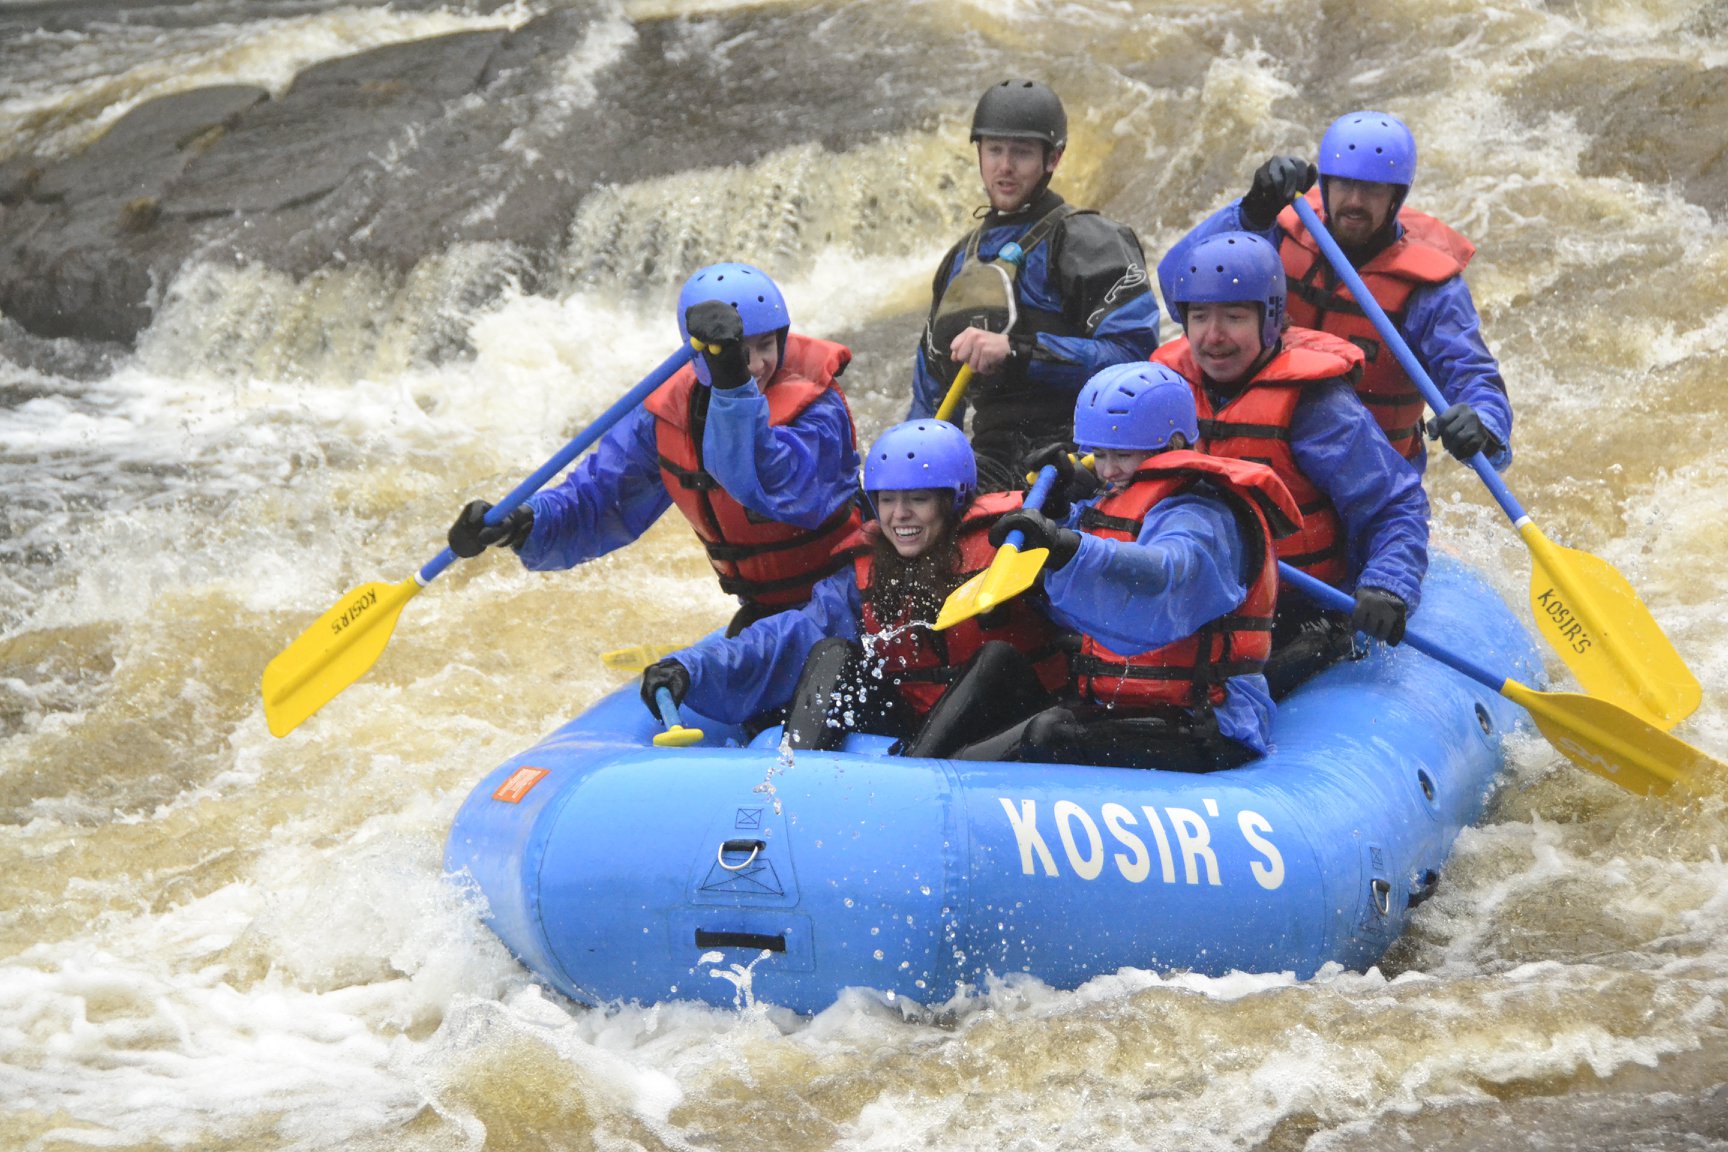 UWGB Students whitewater rafting on the Peschtigo River with UREC